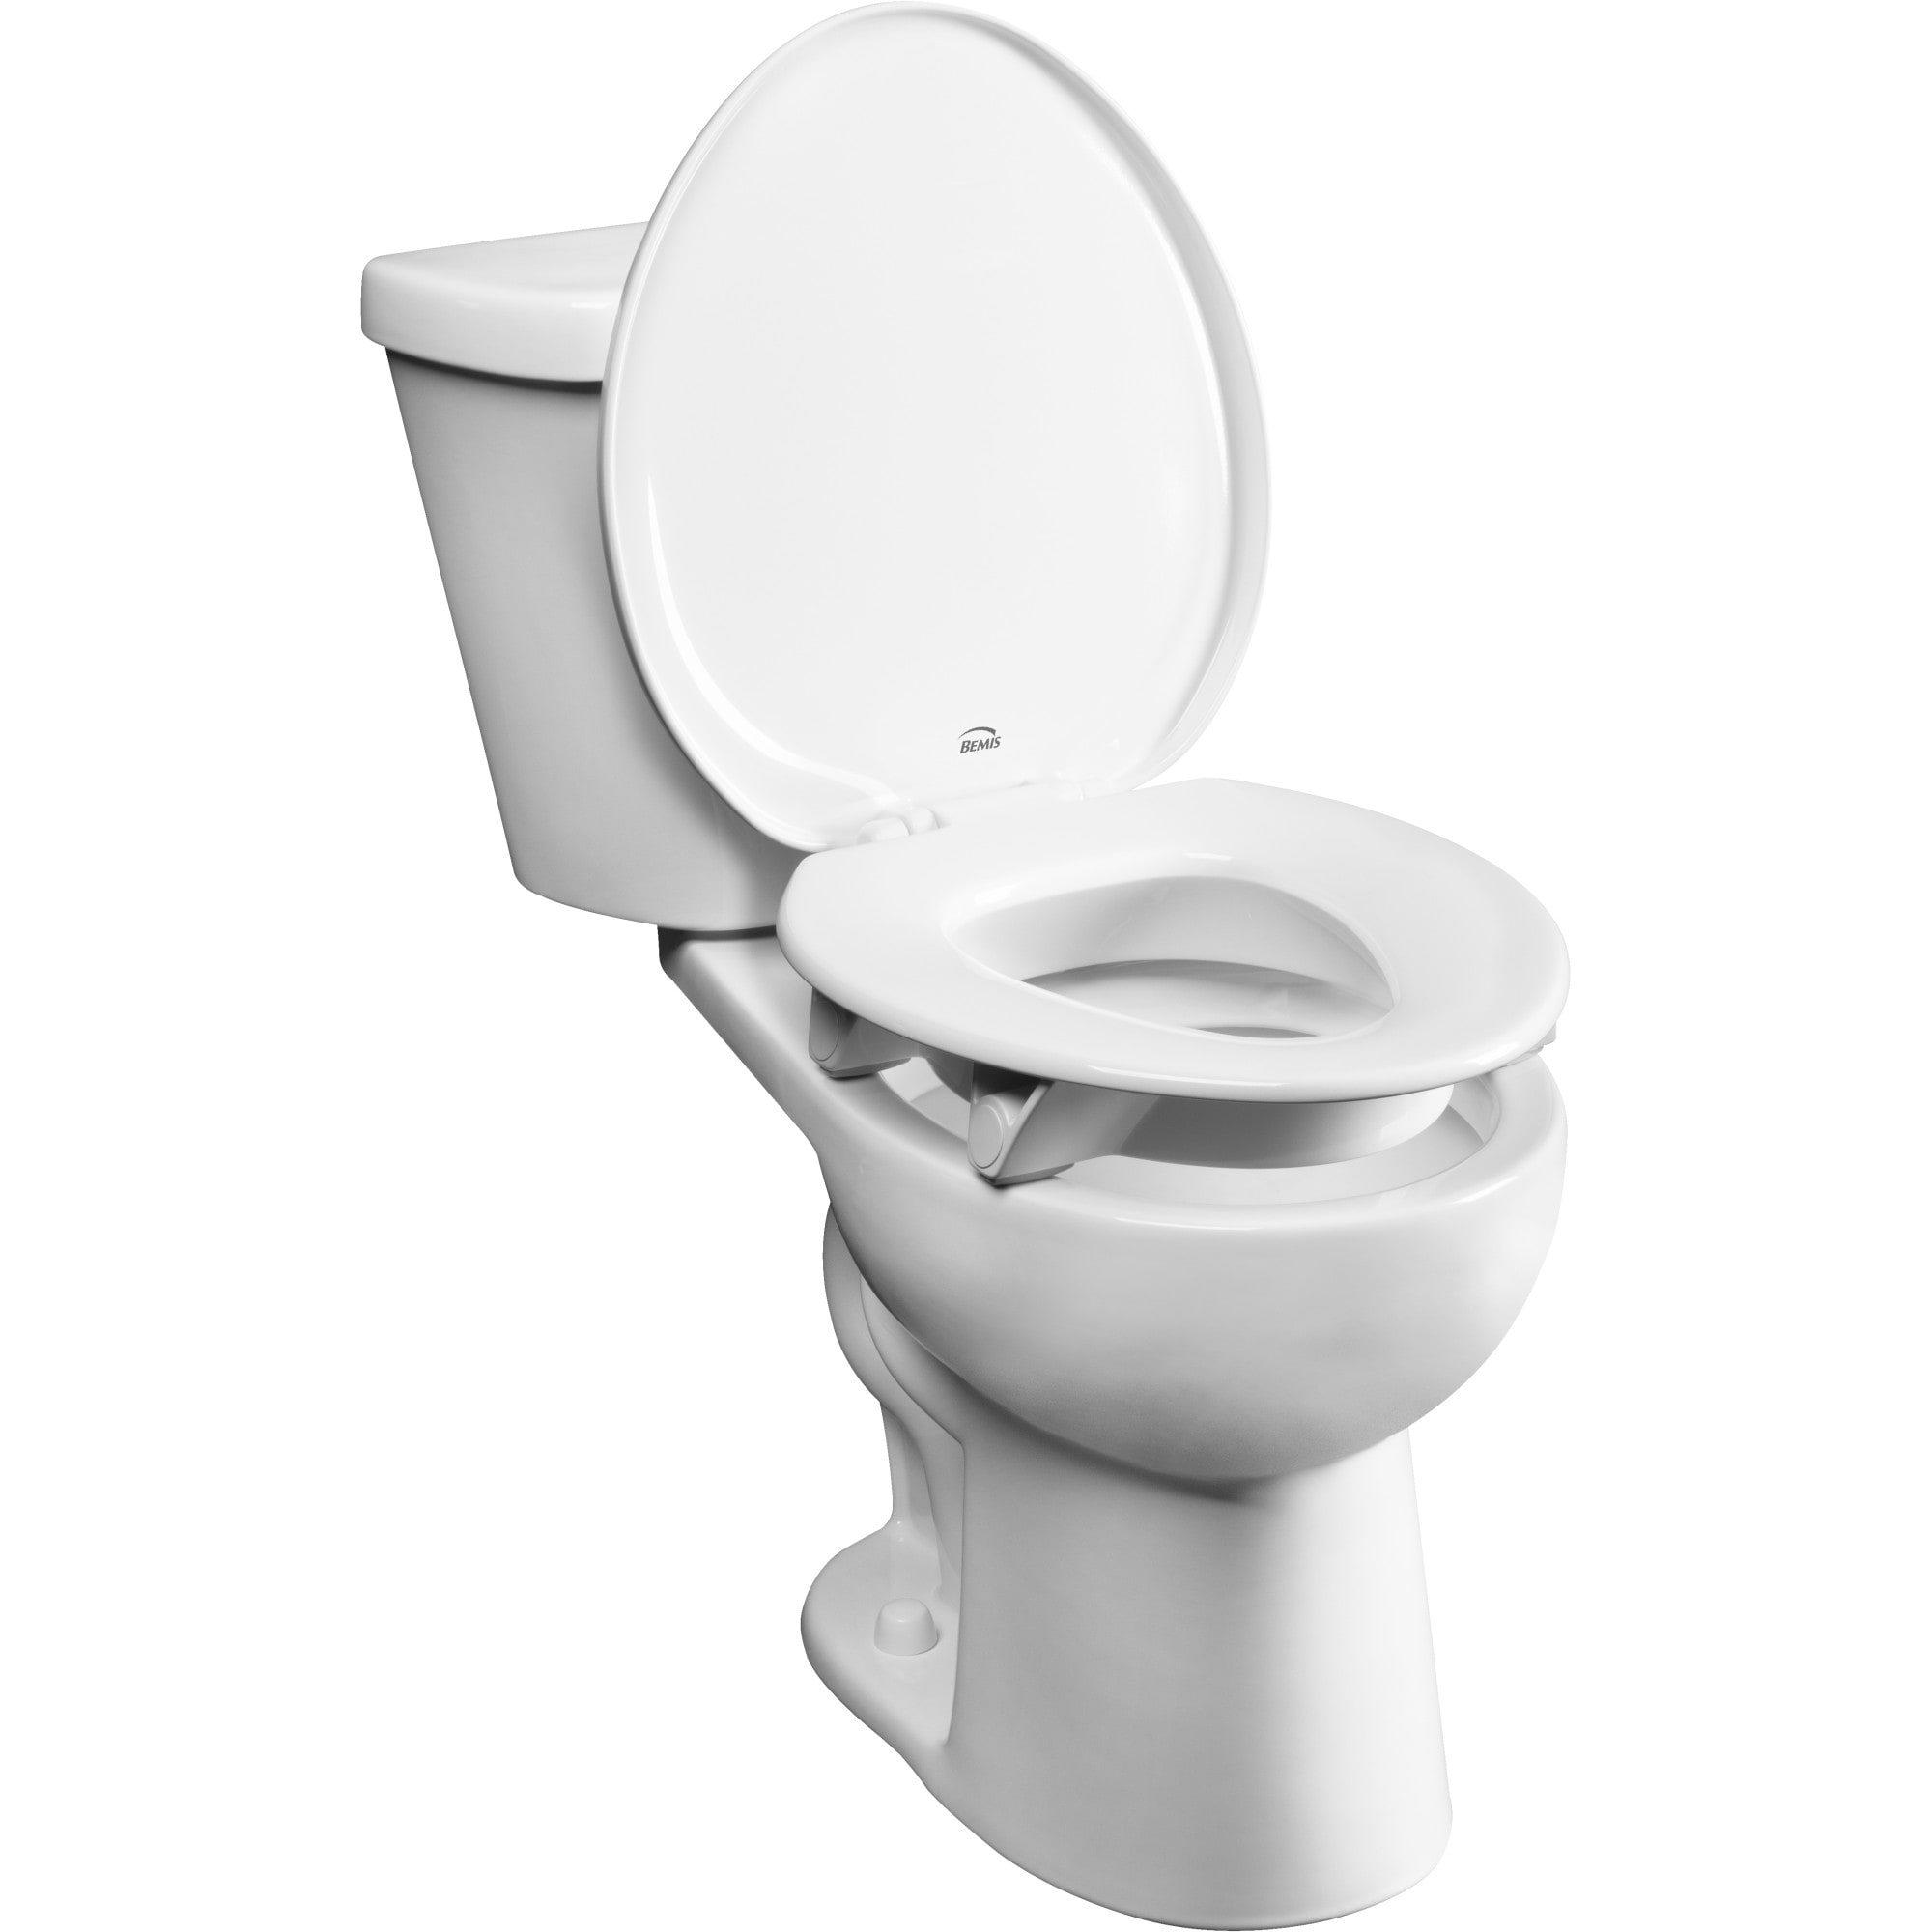 Bemis Independence 4.5 in. Raised Toilet Seat White